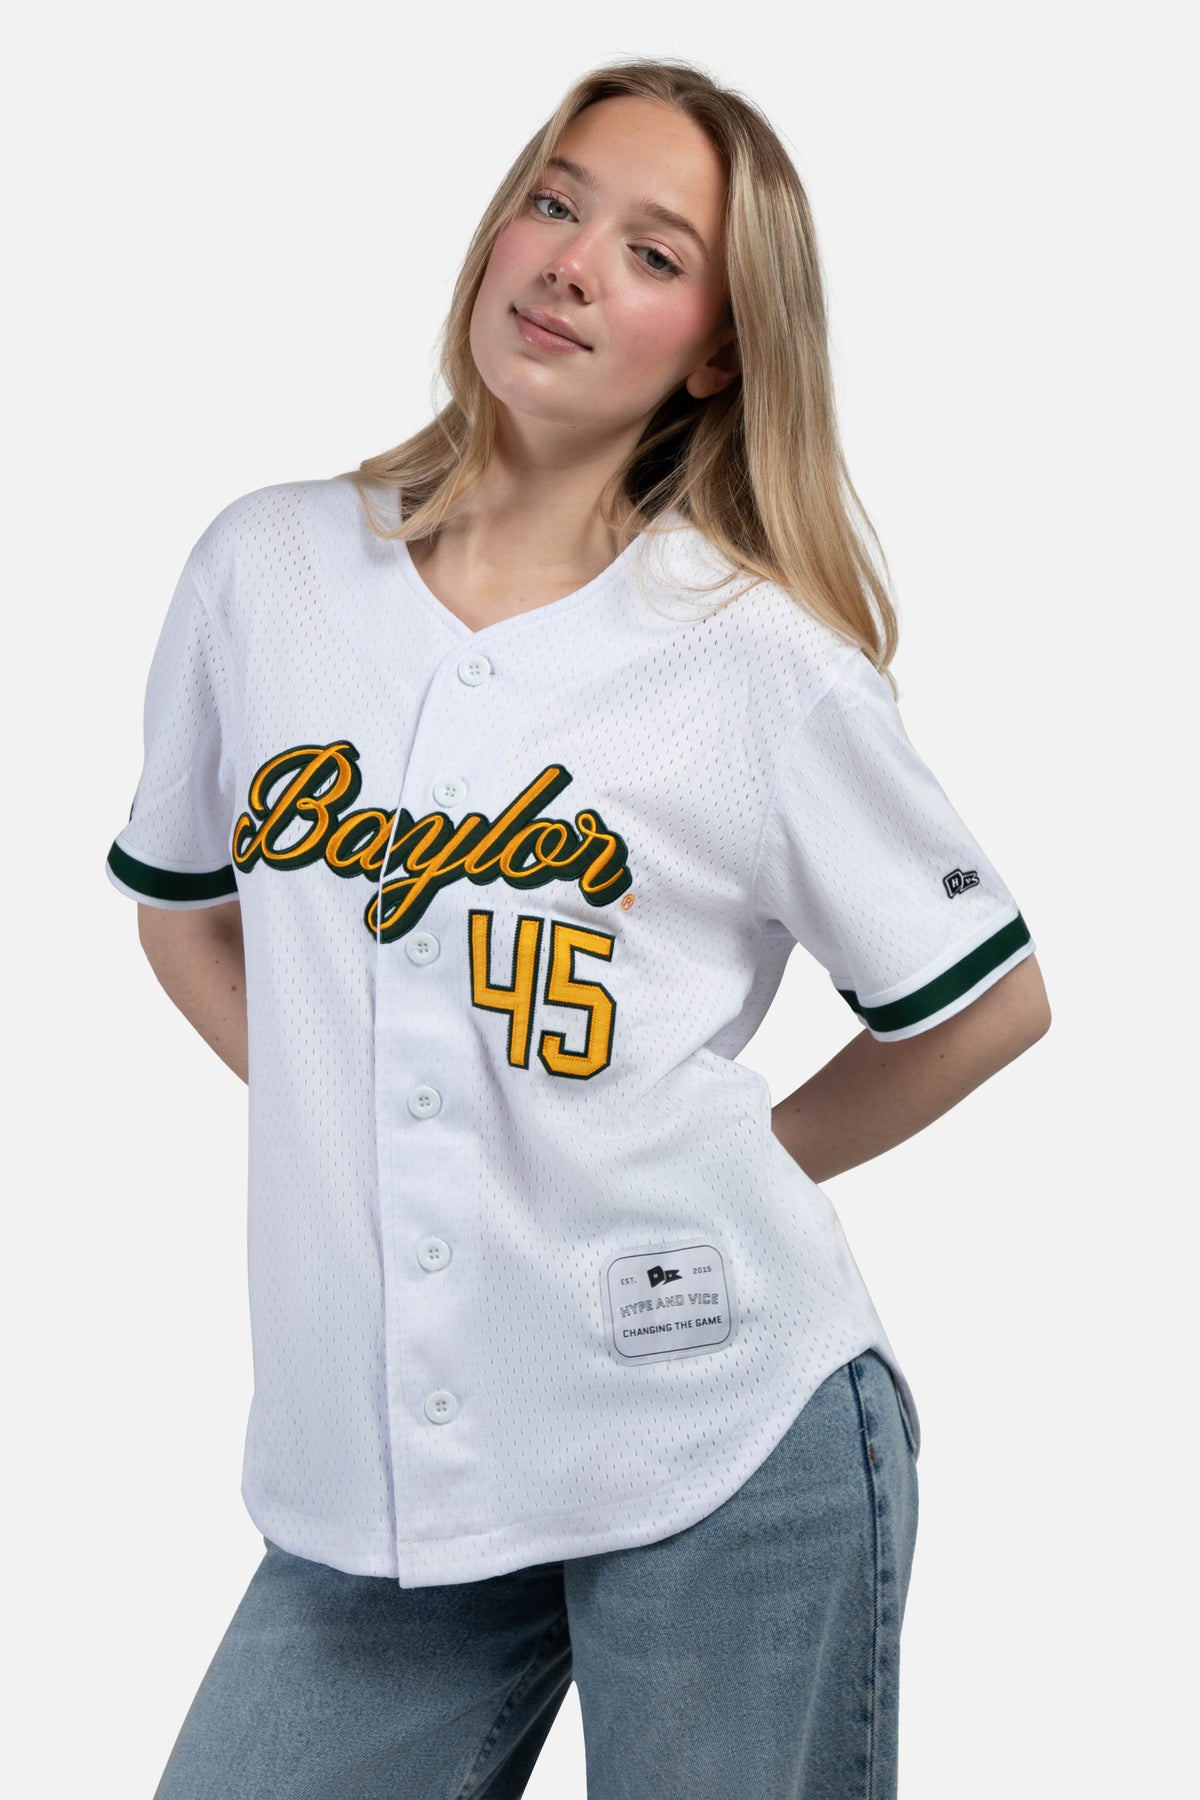 Baylor University Baseball Top